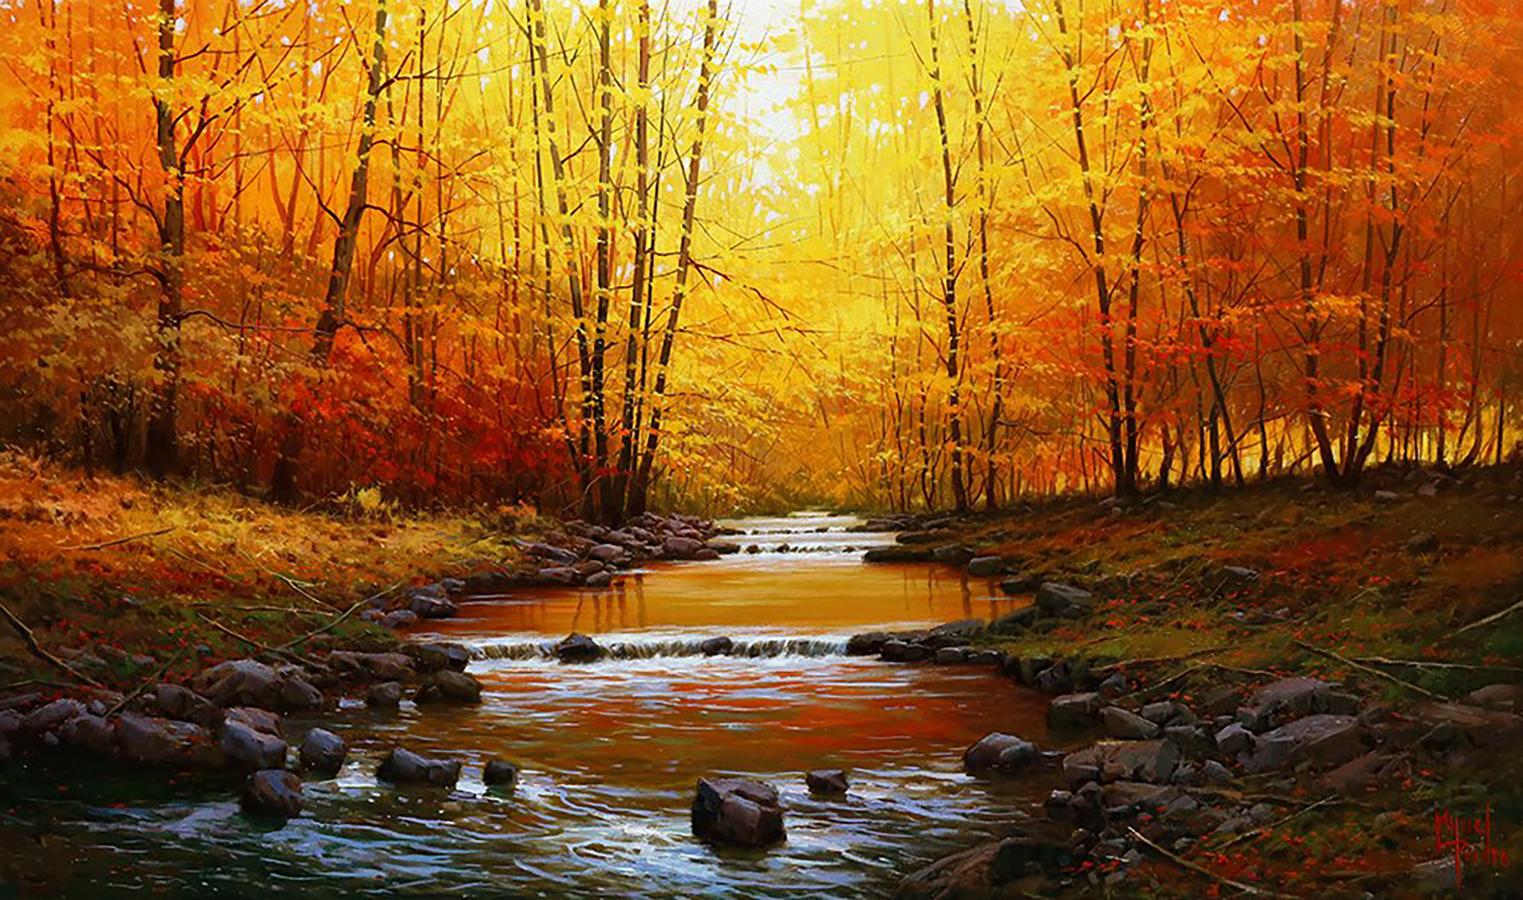 Miguel Peidro, "By the River", 24x39 Autumn Woods Landscape Oil Painting 